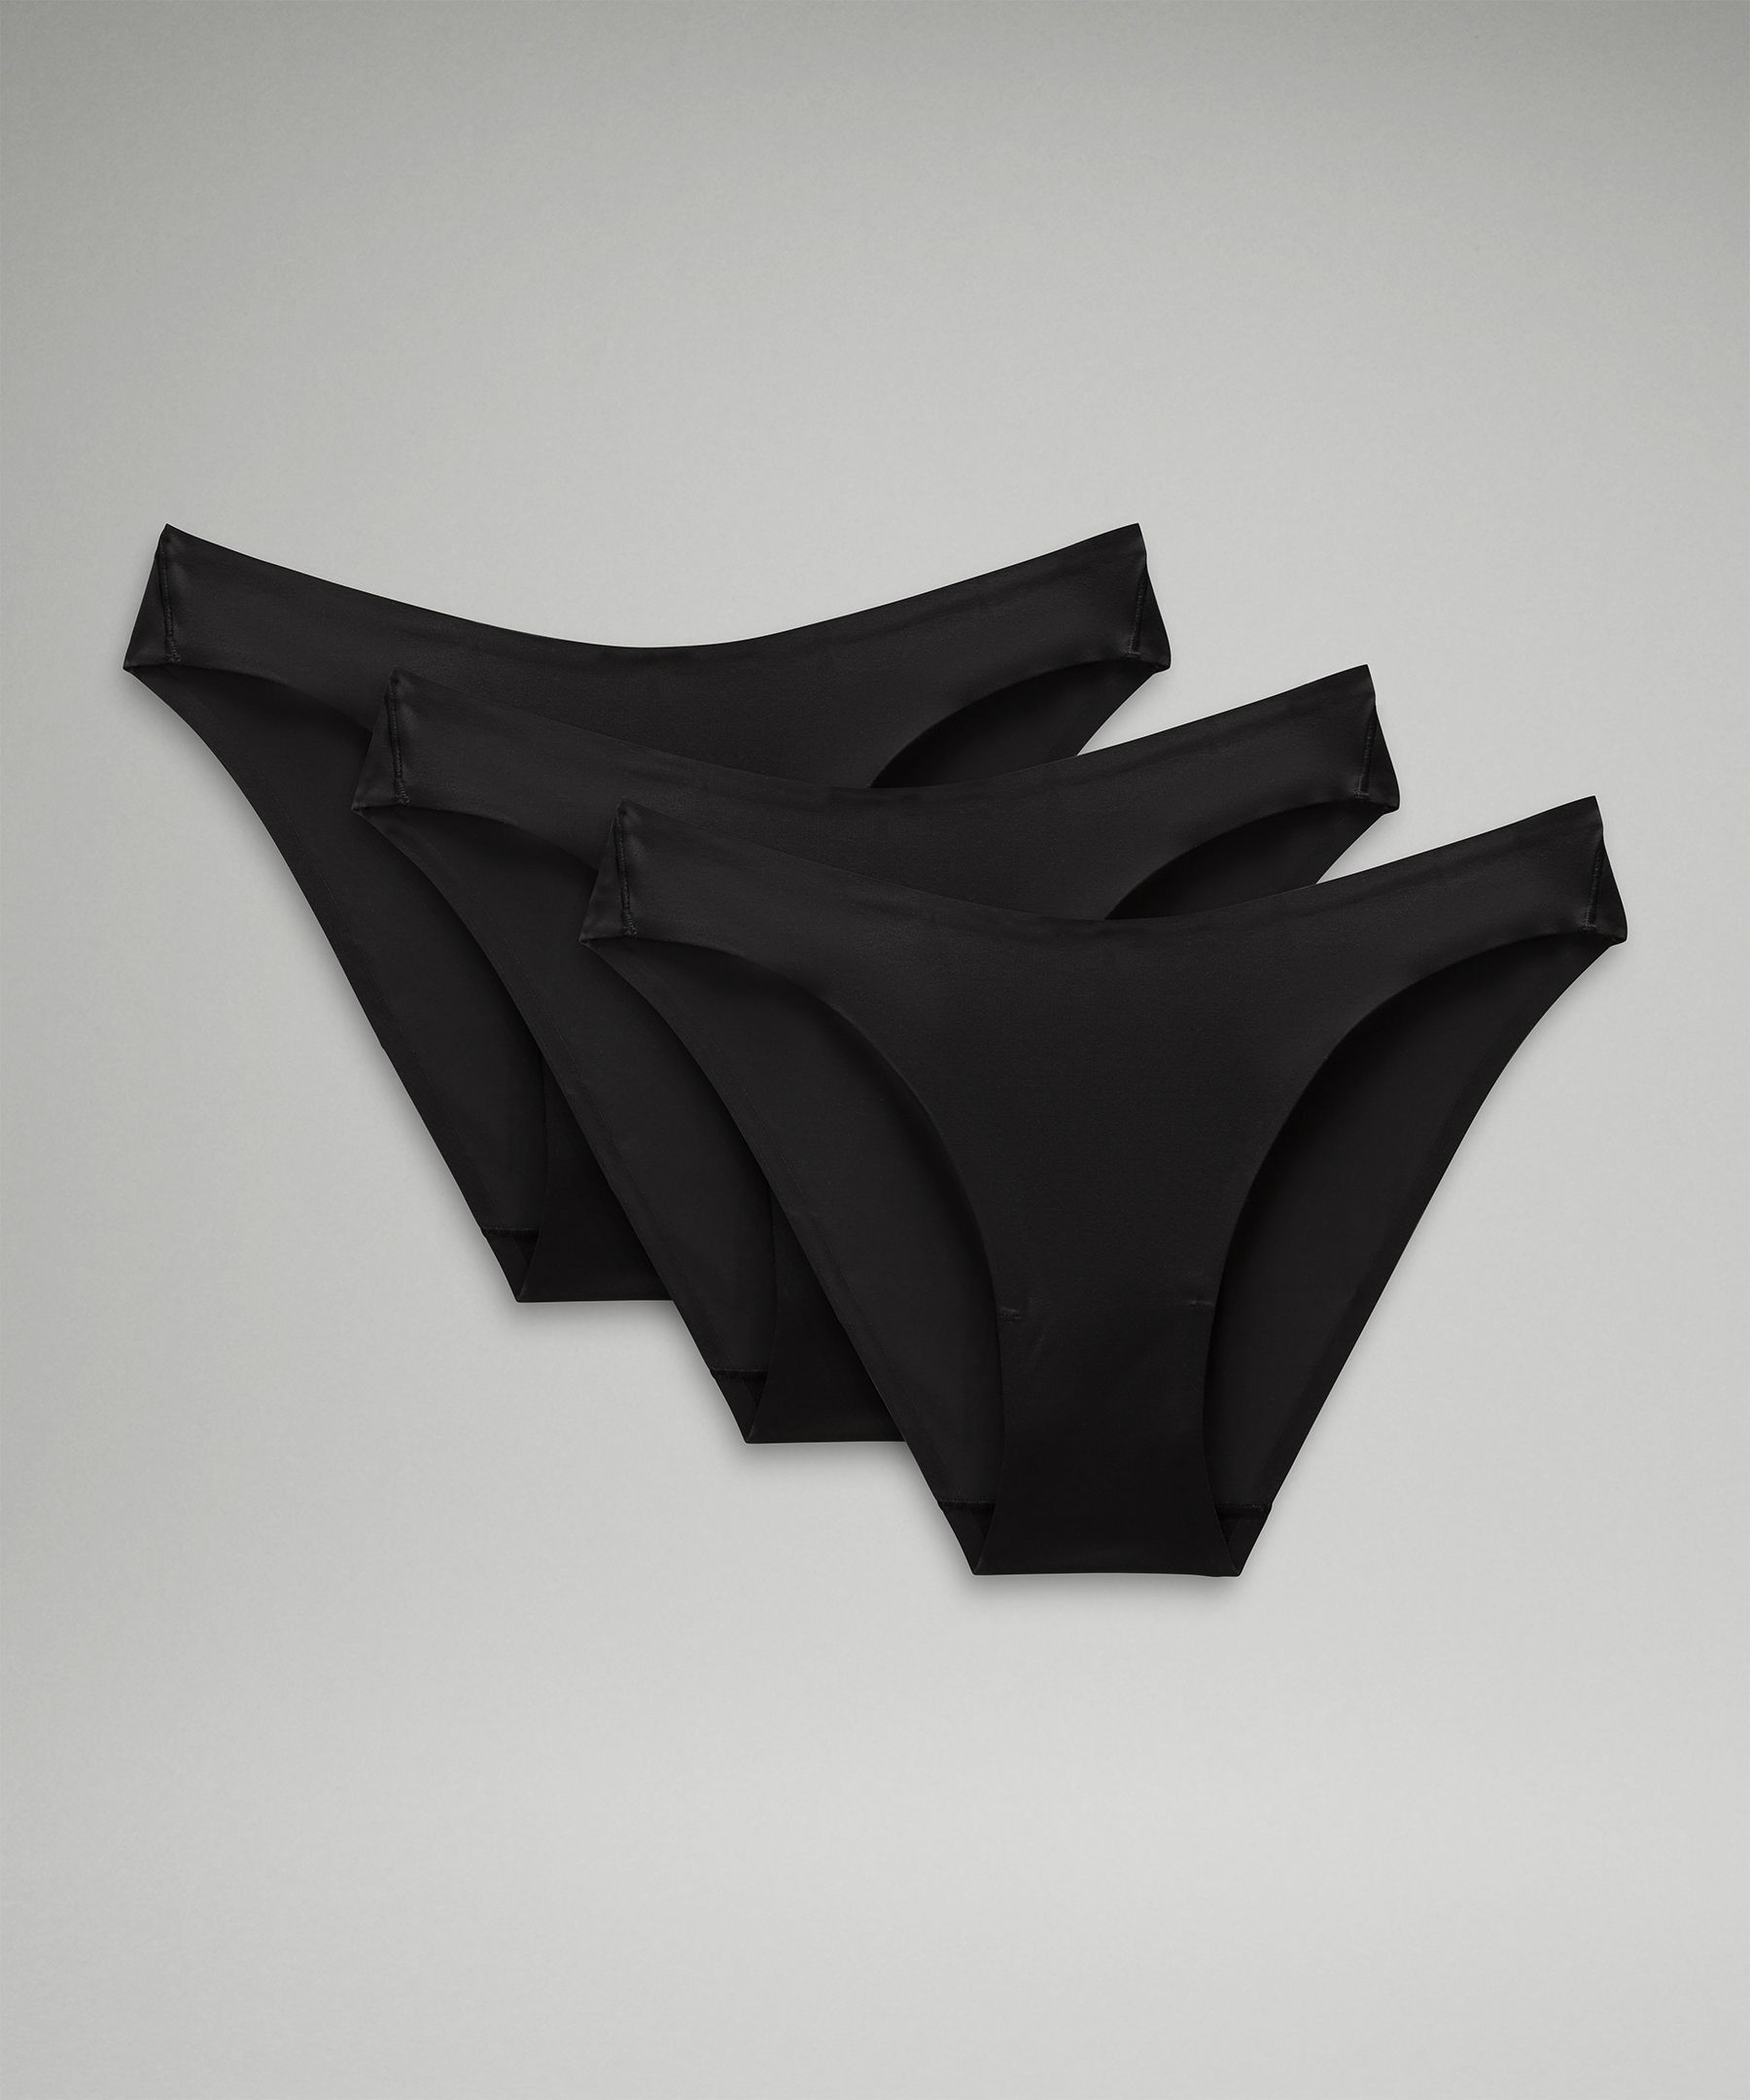 JDEFEG Most Comfortable Womens Underwear Women Panties